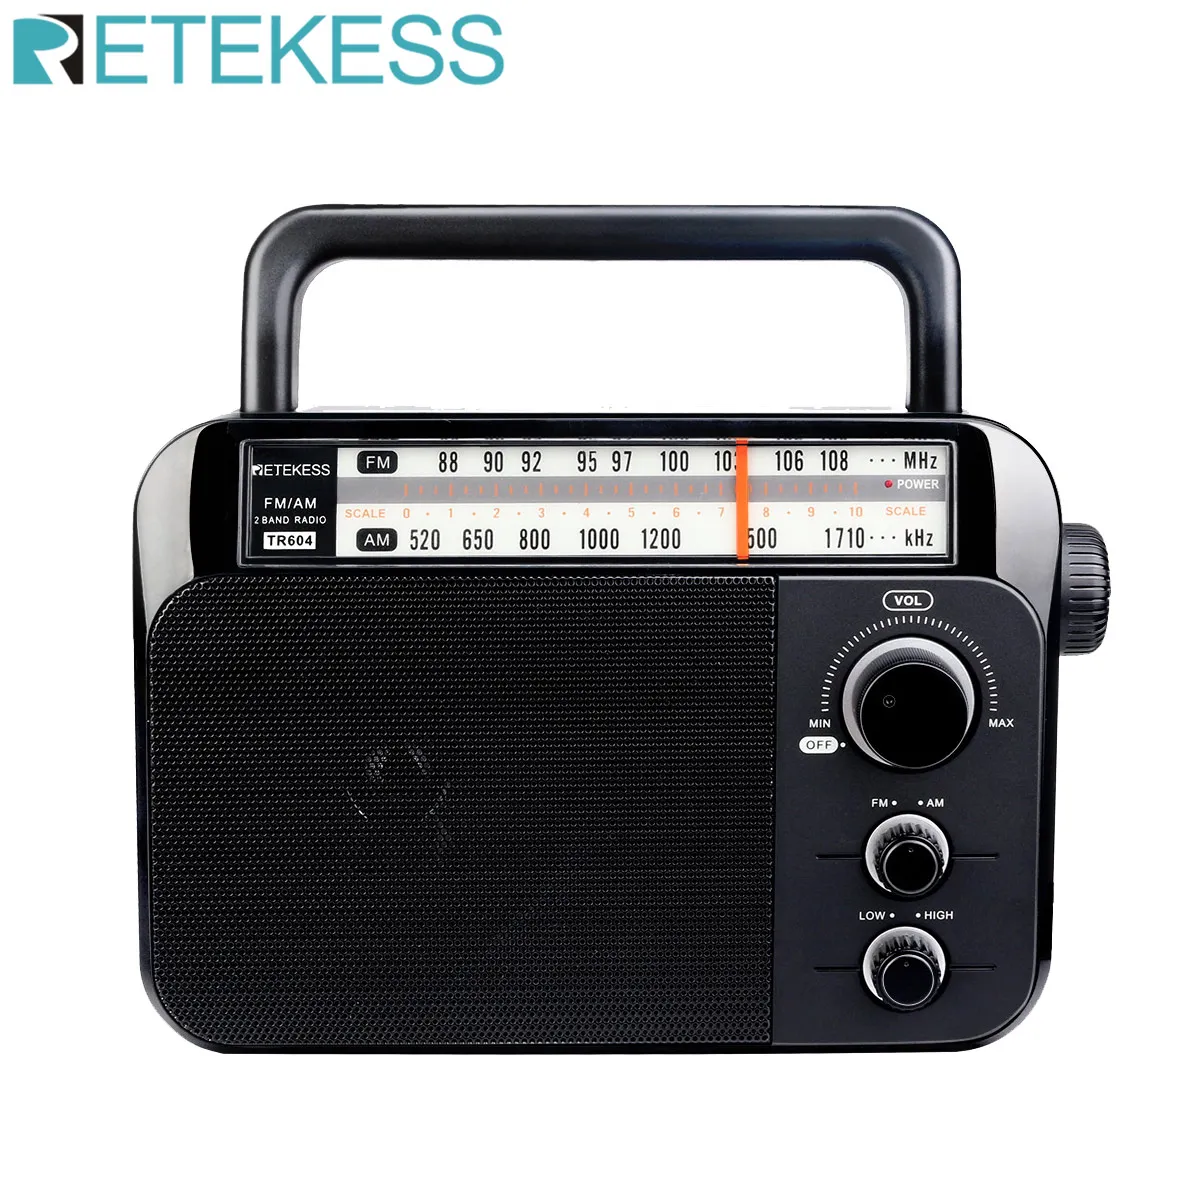 Enlarge Retekess TR604 AM FM Radio Portable Plug in Radio Transistor Powered by 3 D Batteries or AC 110V/220V for Senior and Home